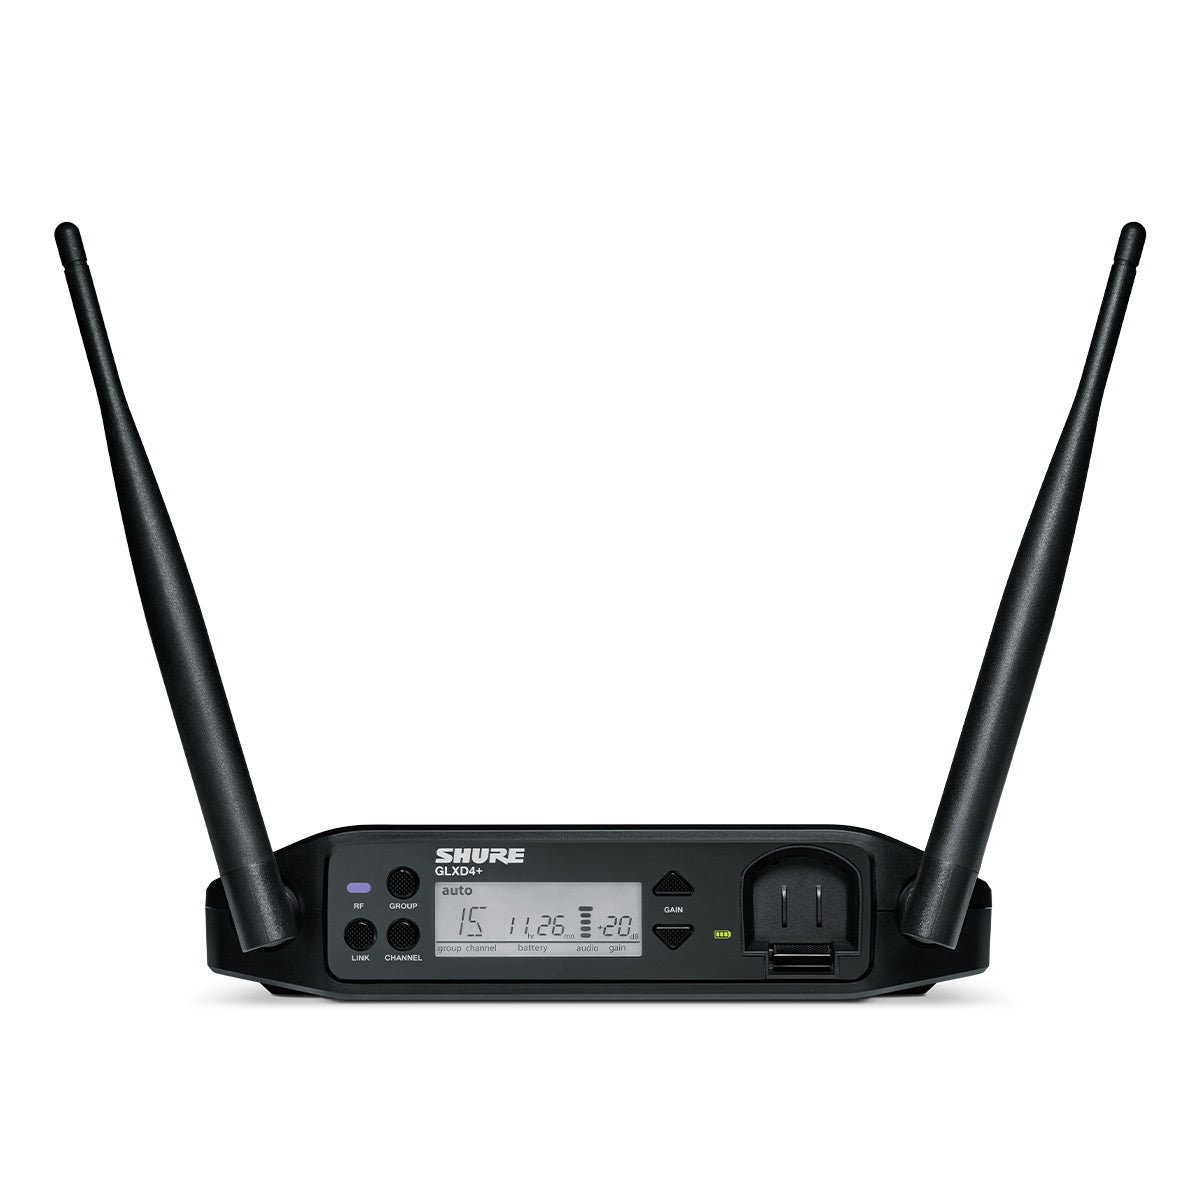 Shure GLXD24+/SM58-Z3 Dual Band Wireless System with GLXD4+ Tabletop Receiver & GLXD2+/SM58 Handheld Microphone